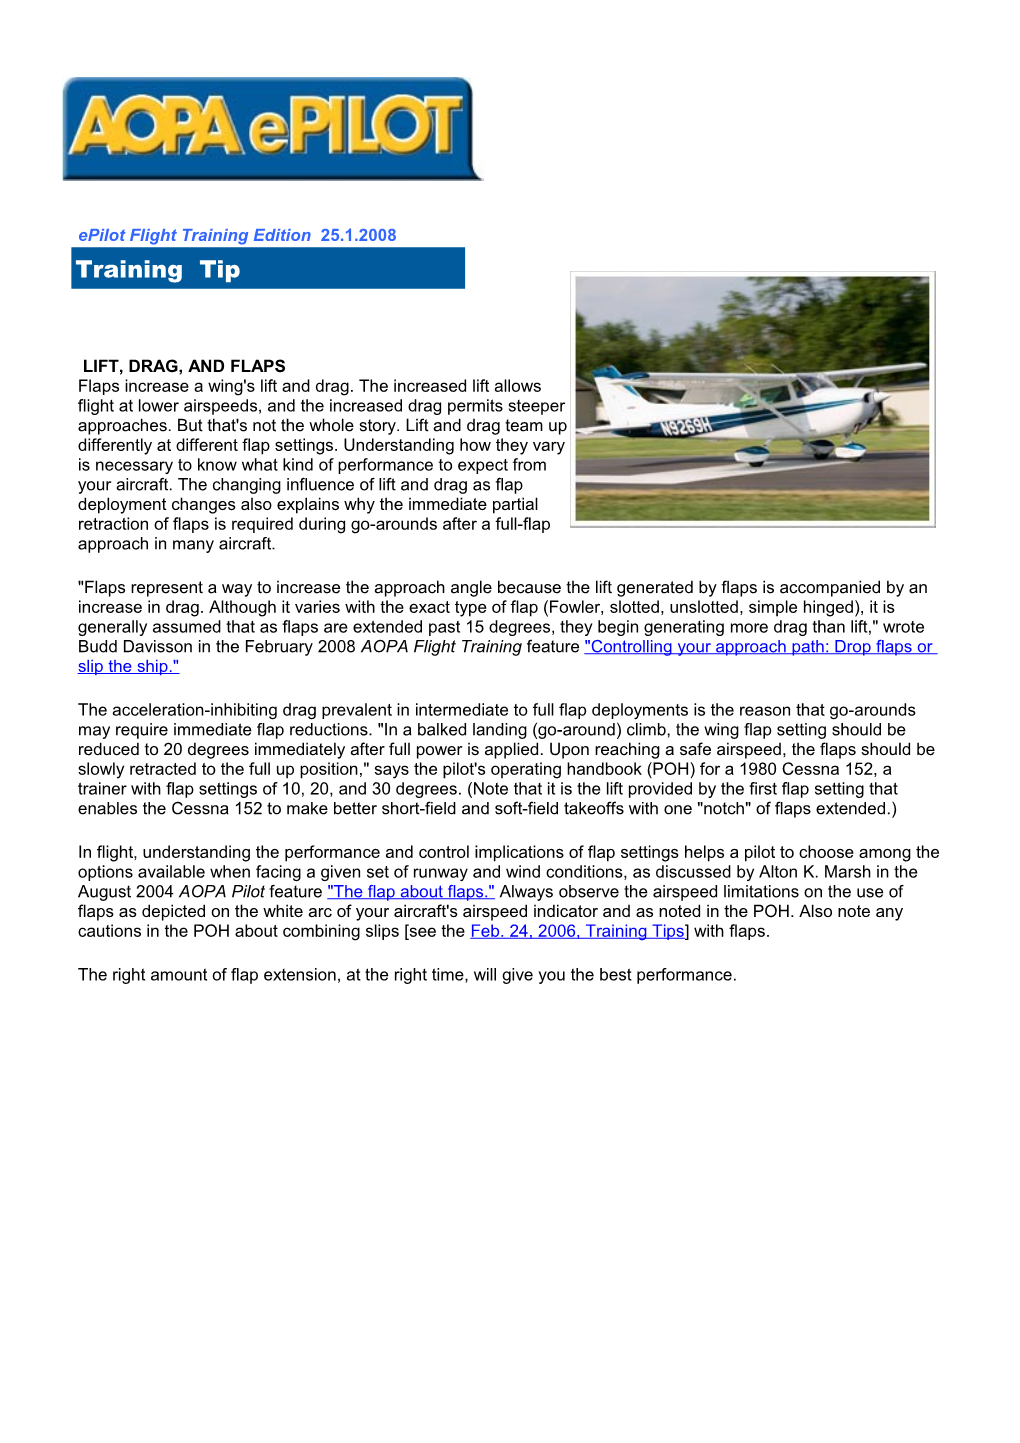 Epilot Flight Training Edition 25.1.2008